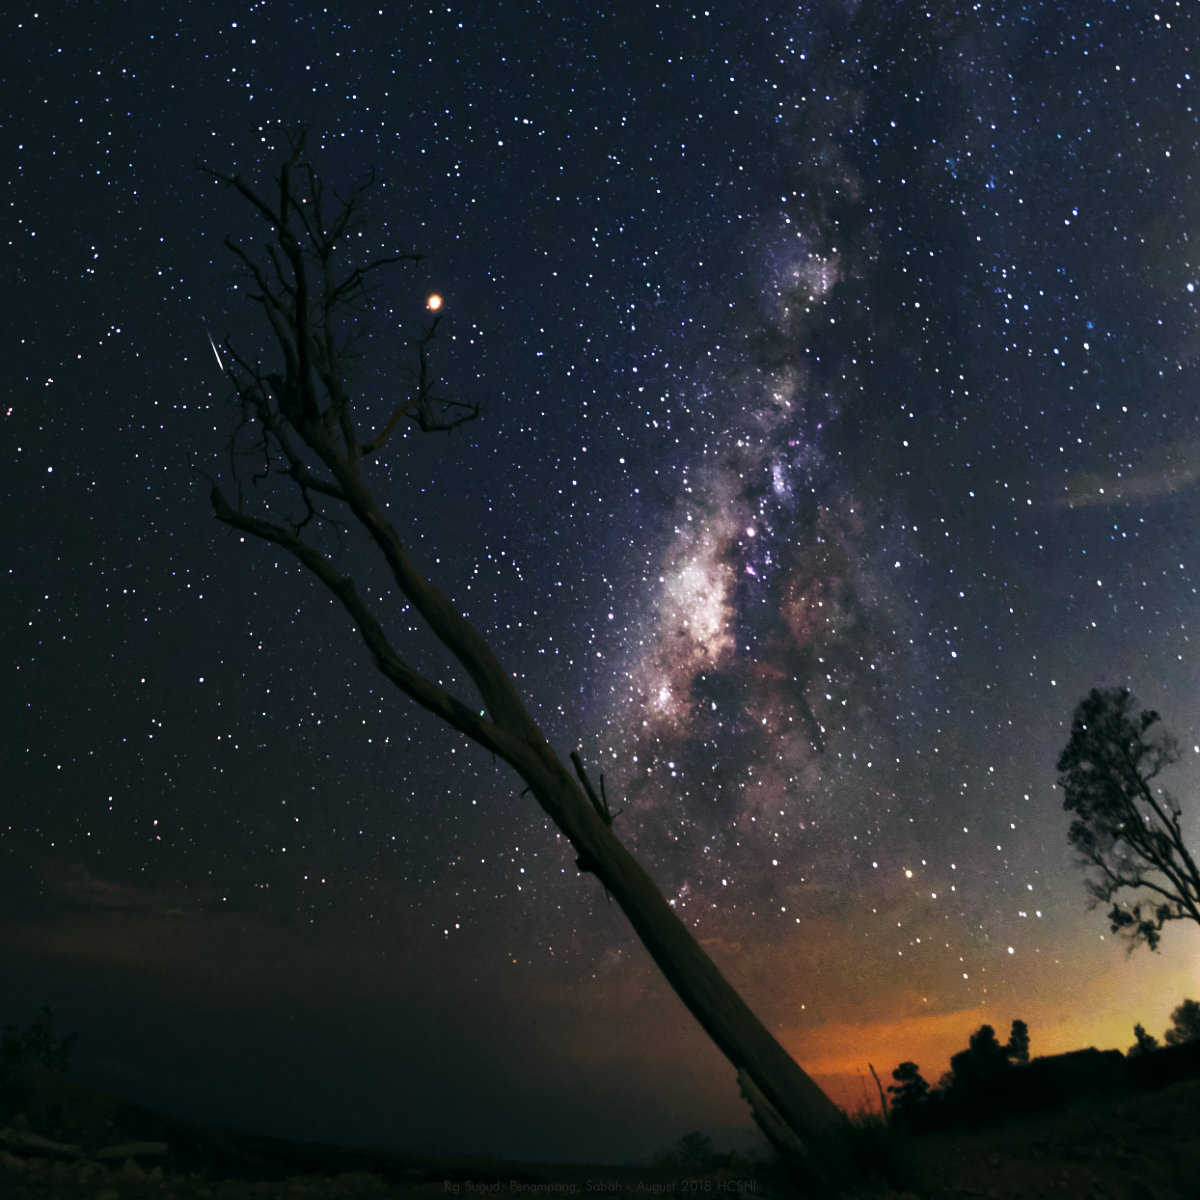 Meteor, Mars, Milky Way and Lone Tree at Kg Sugud, Penampang, Sabah - 2018 Aug 13